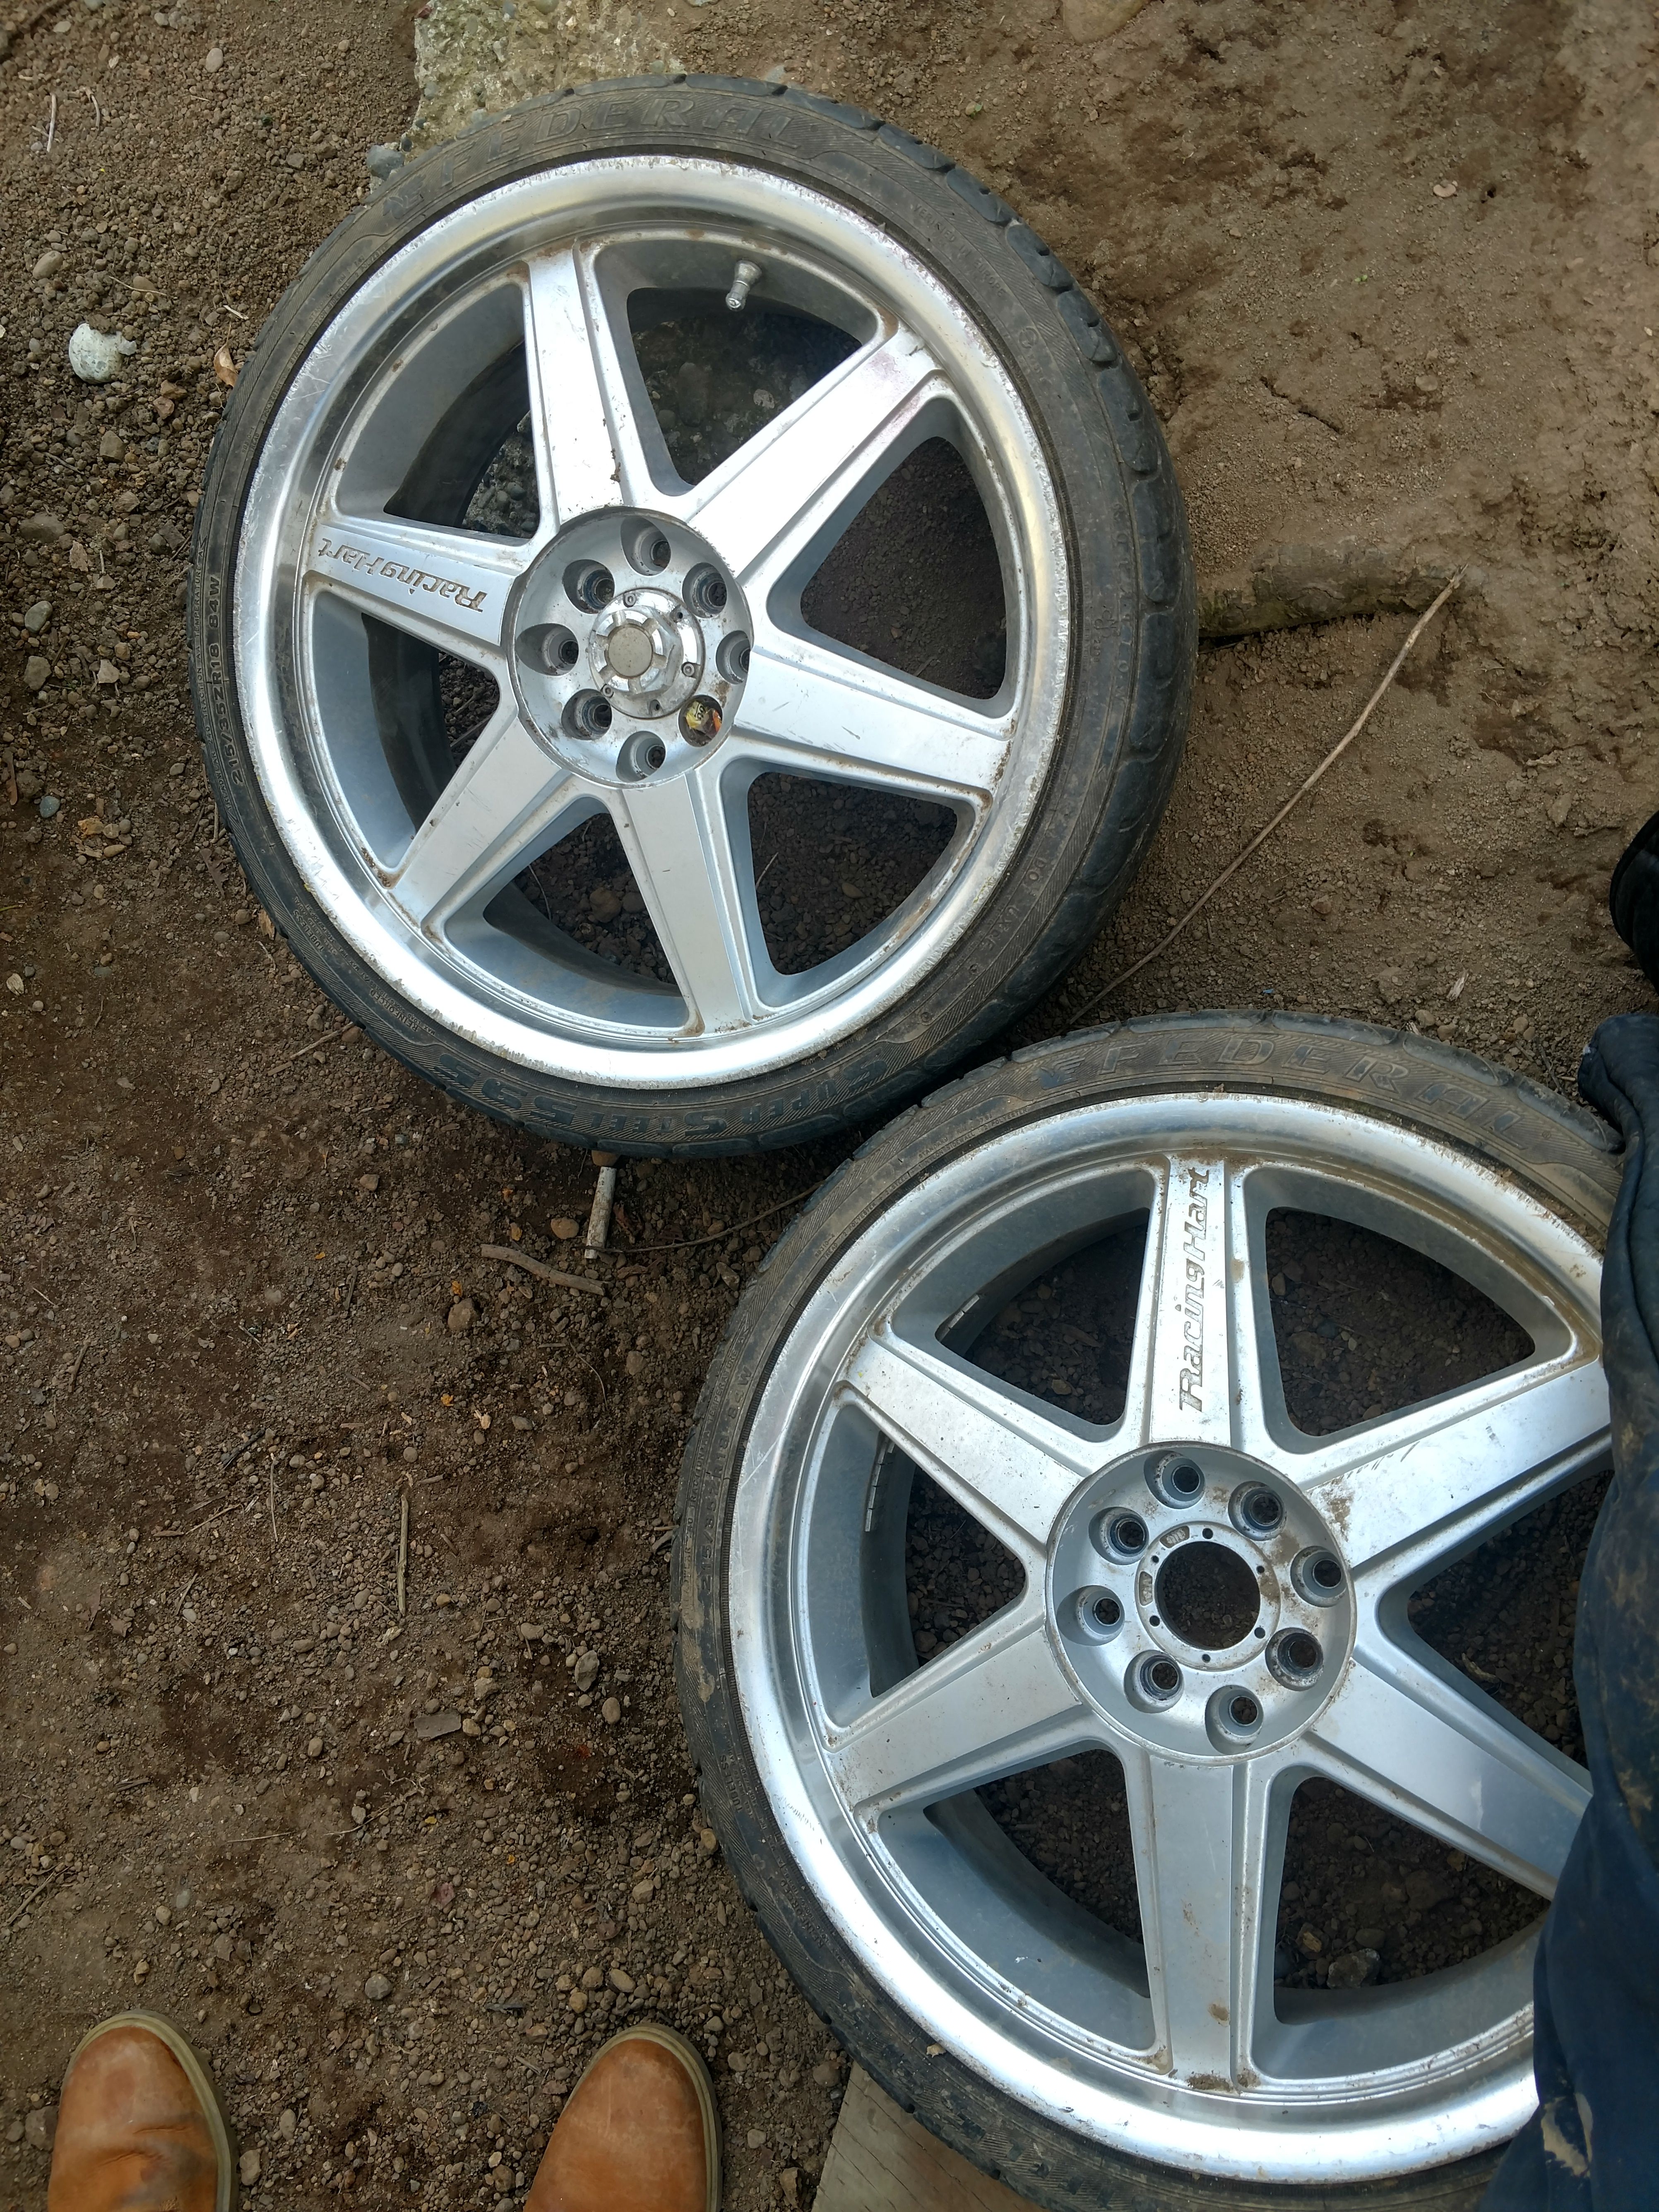 215/35zr18 84w 2-low profile tires & rims fit Honda/Acura decent tread tires/rims no problems or punctures/patches